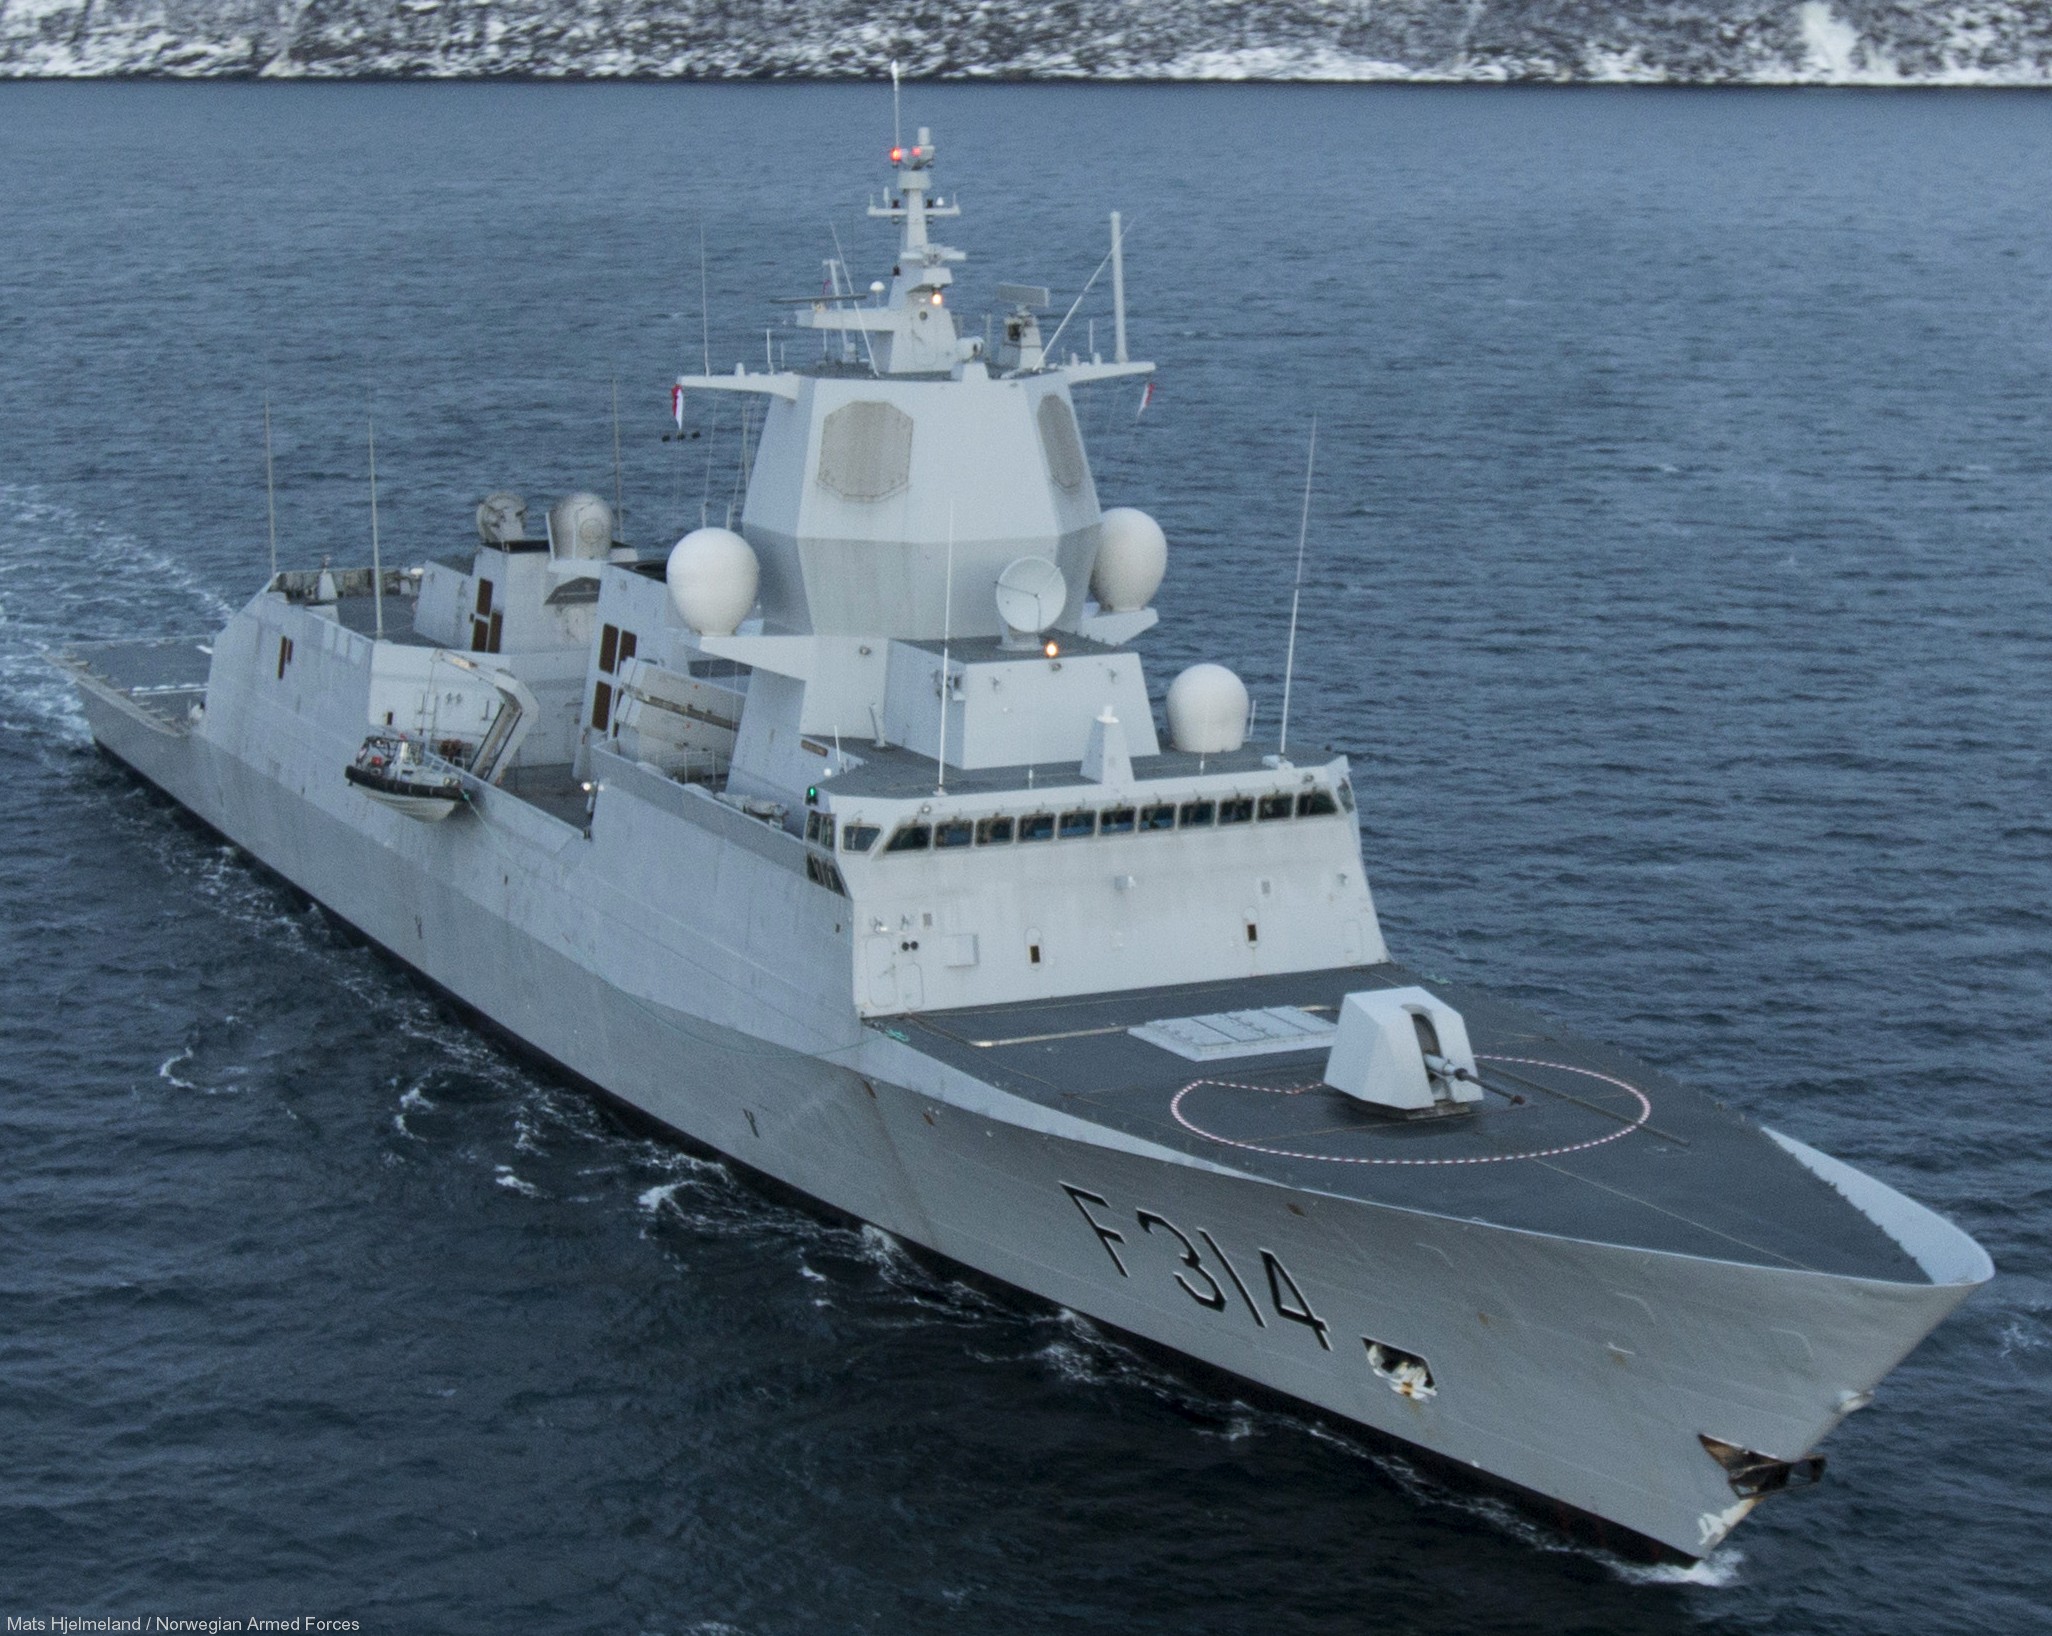 f-314 thor heyerdahl hnoms knm fridtjof nansen class frigate royal norwegian navy 30 aegis rim-162 essm